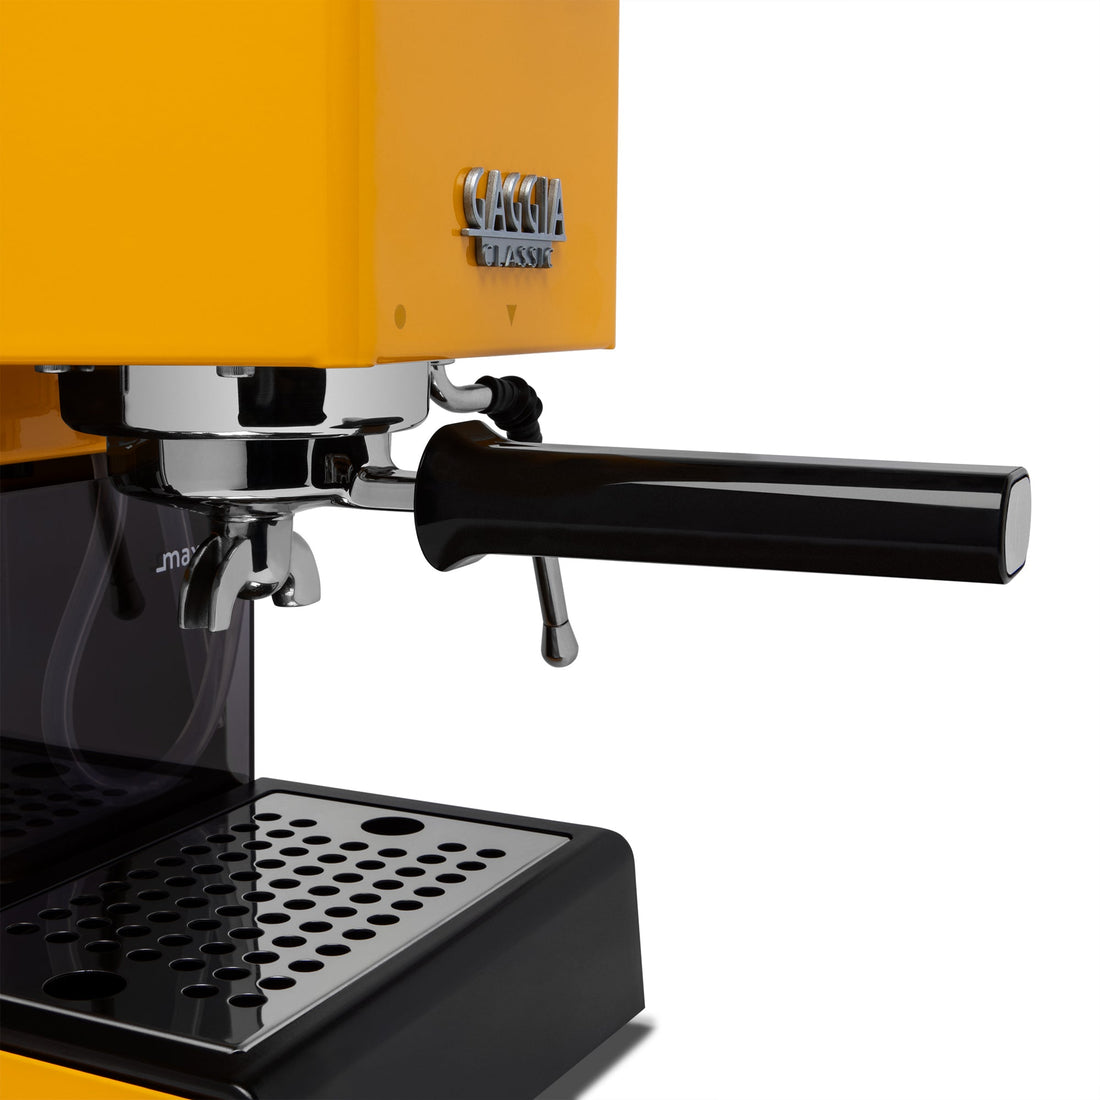 Gaggia Classic Evo Pro Espresso Machine in Sunshine Yellow with Walnut